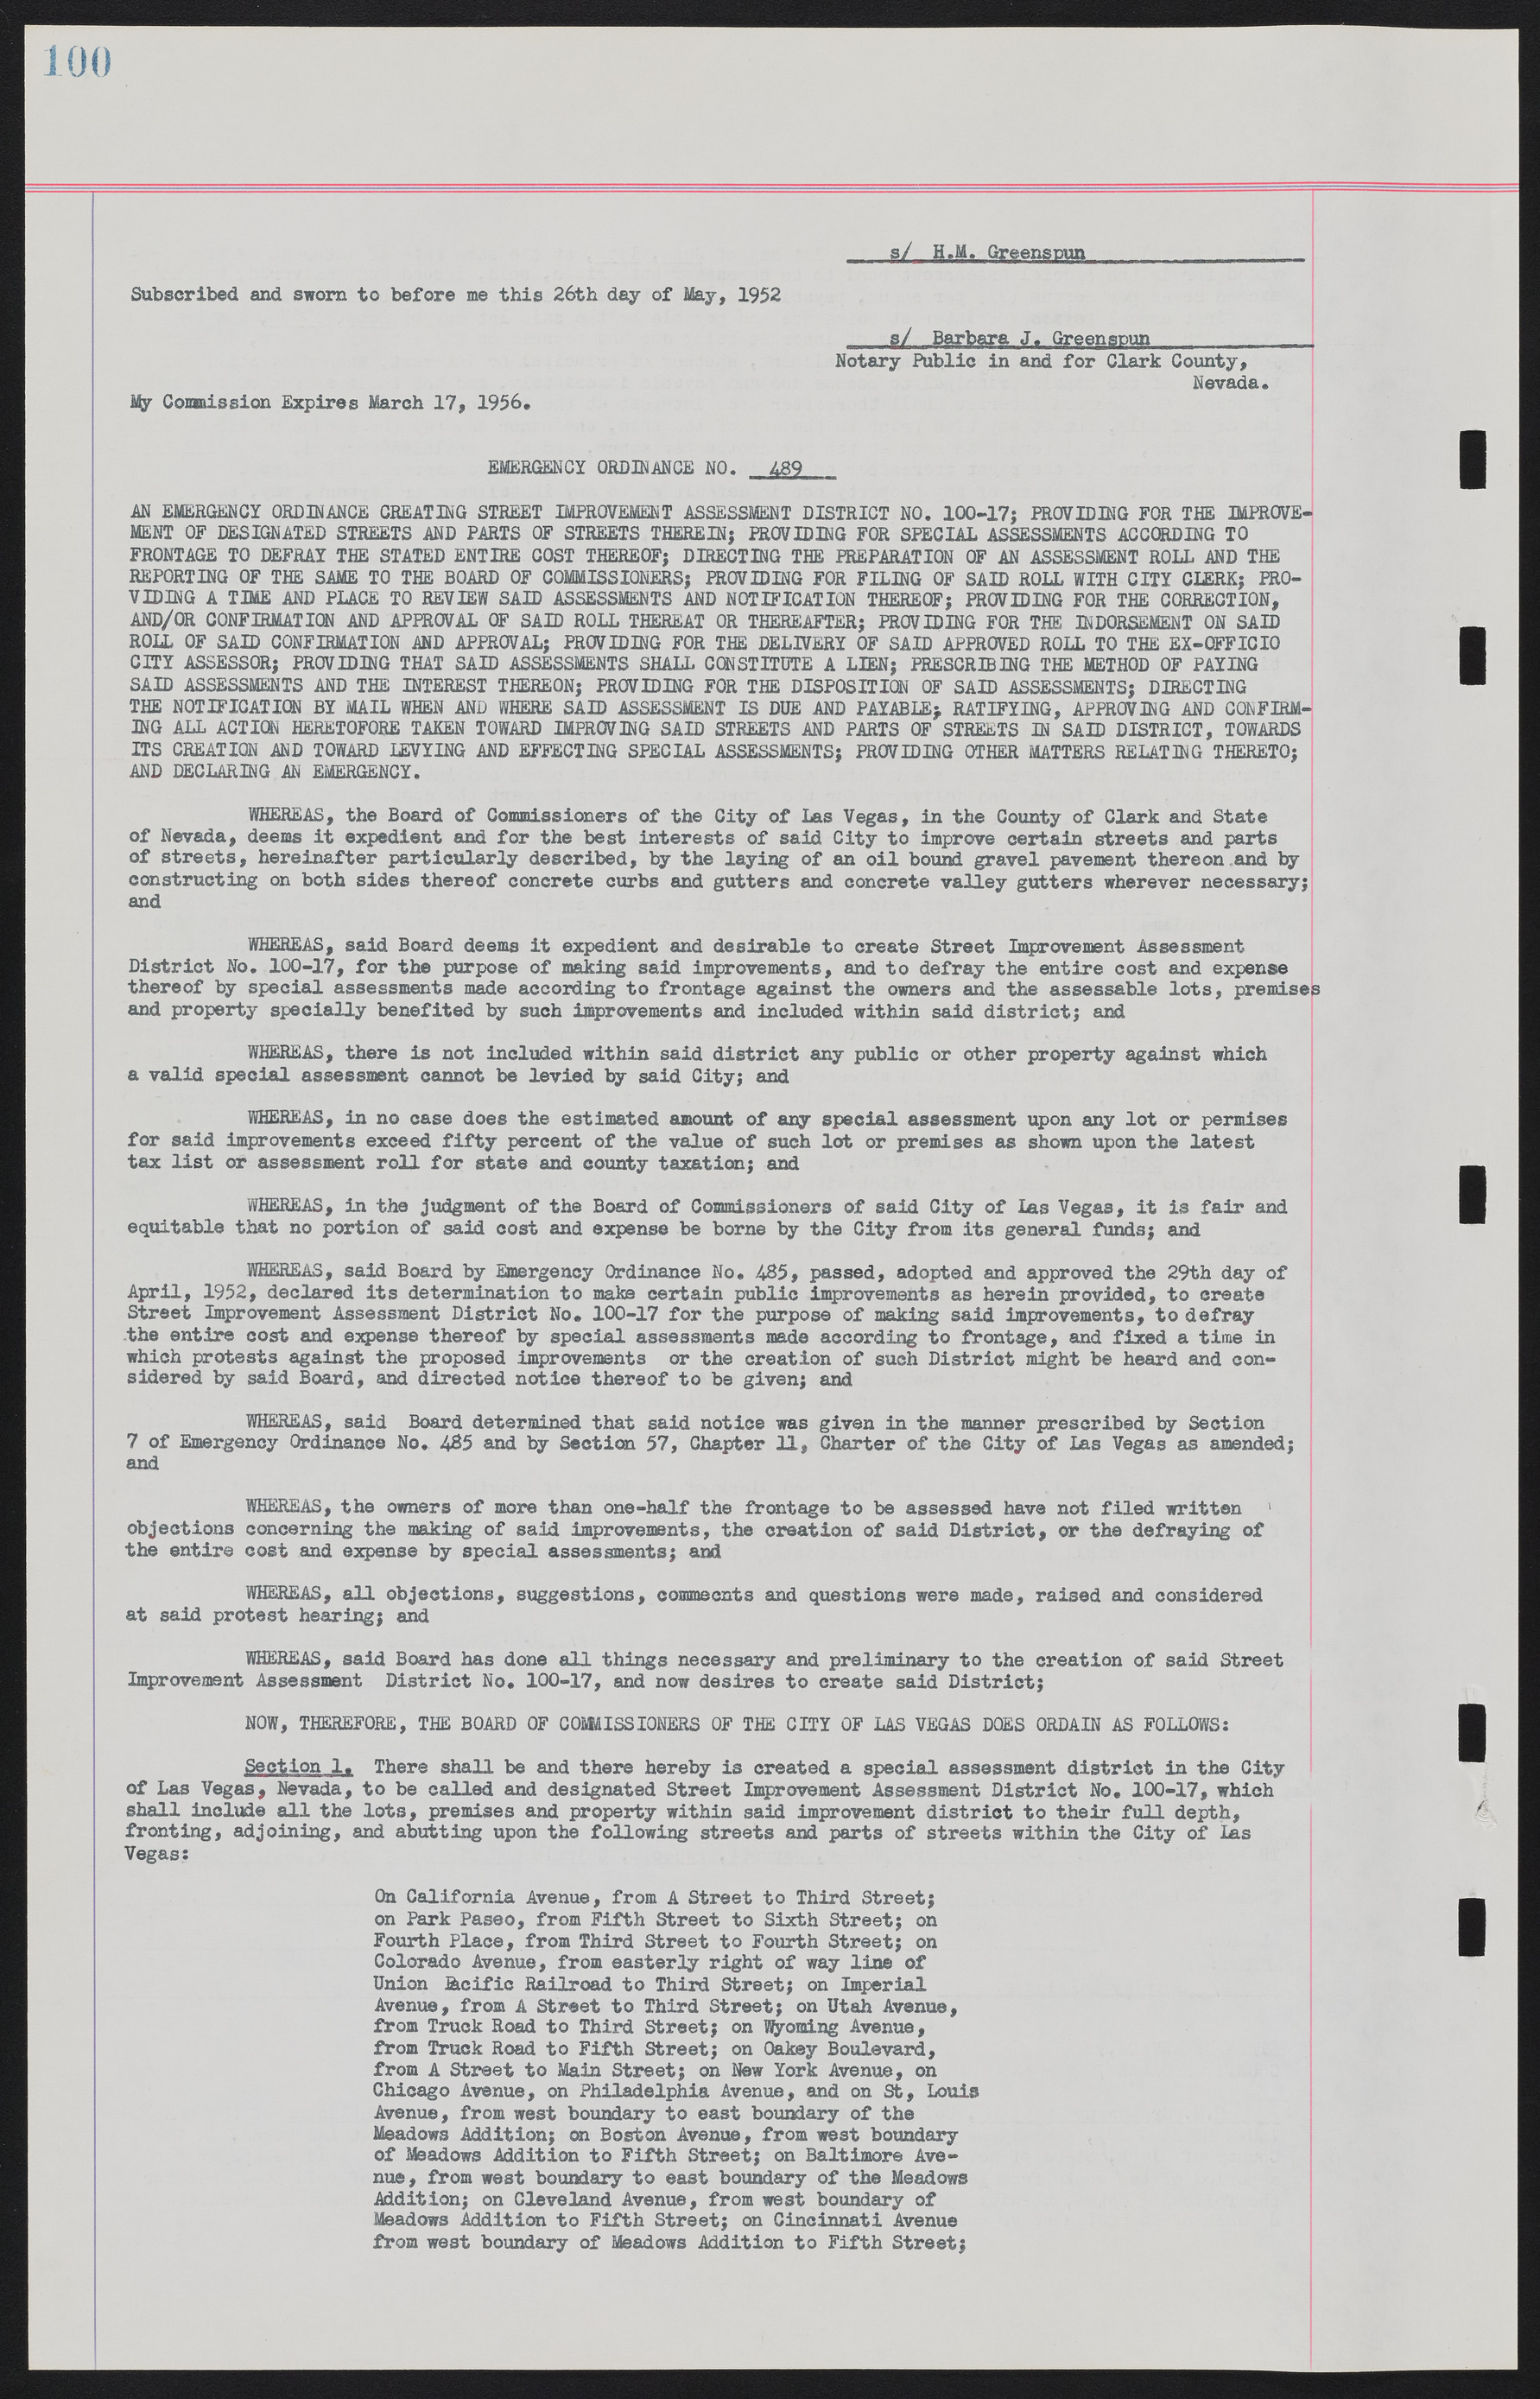 Las Vegas City Ordinances, November 13, 1950 to August 6, 1958, lvc000015-108